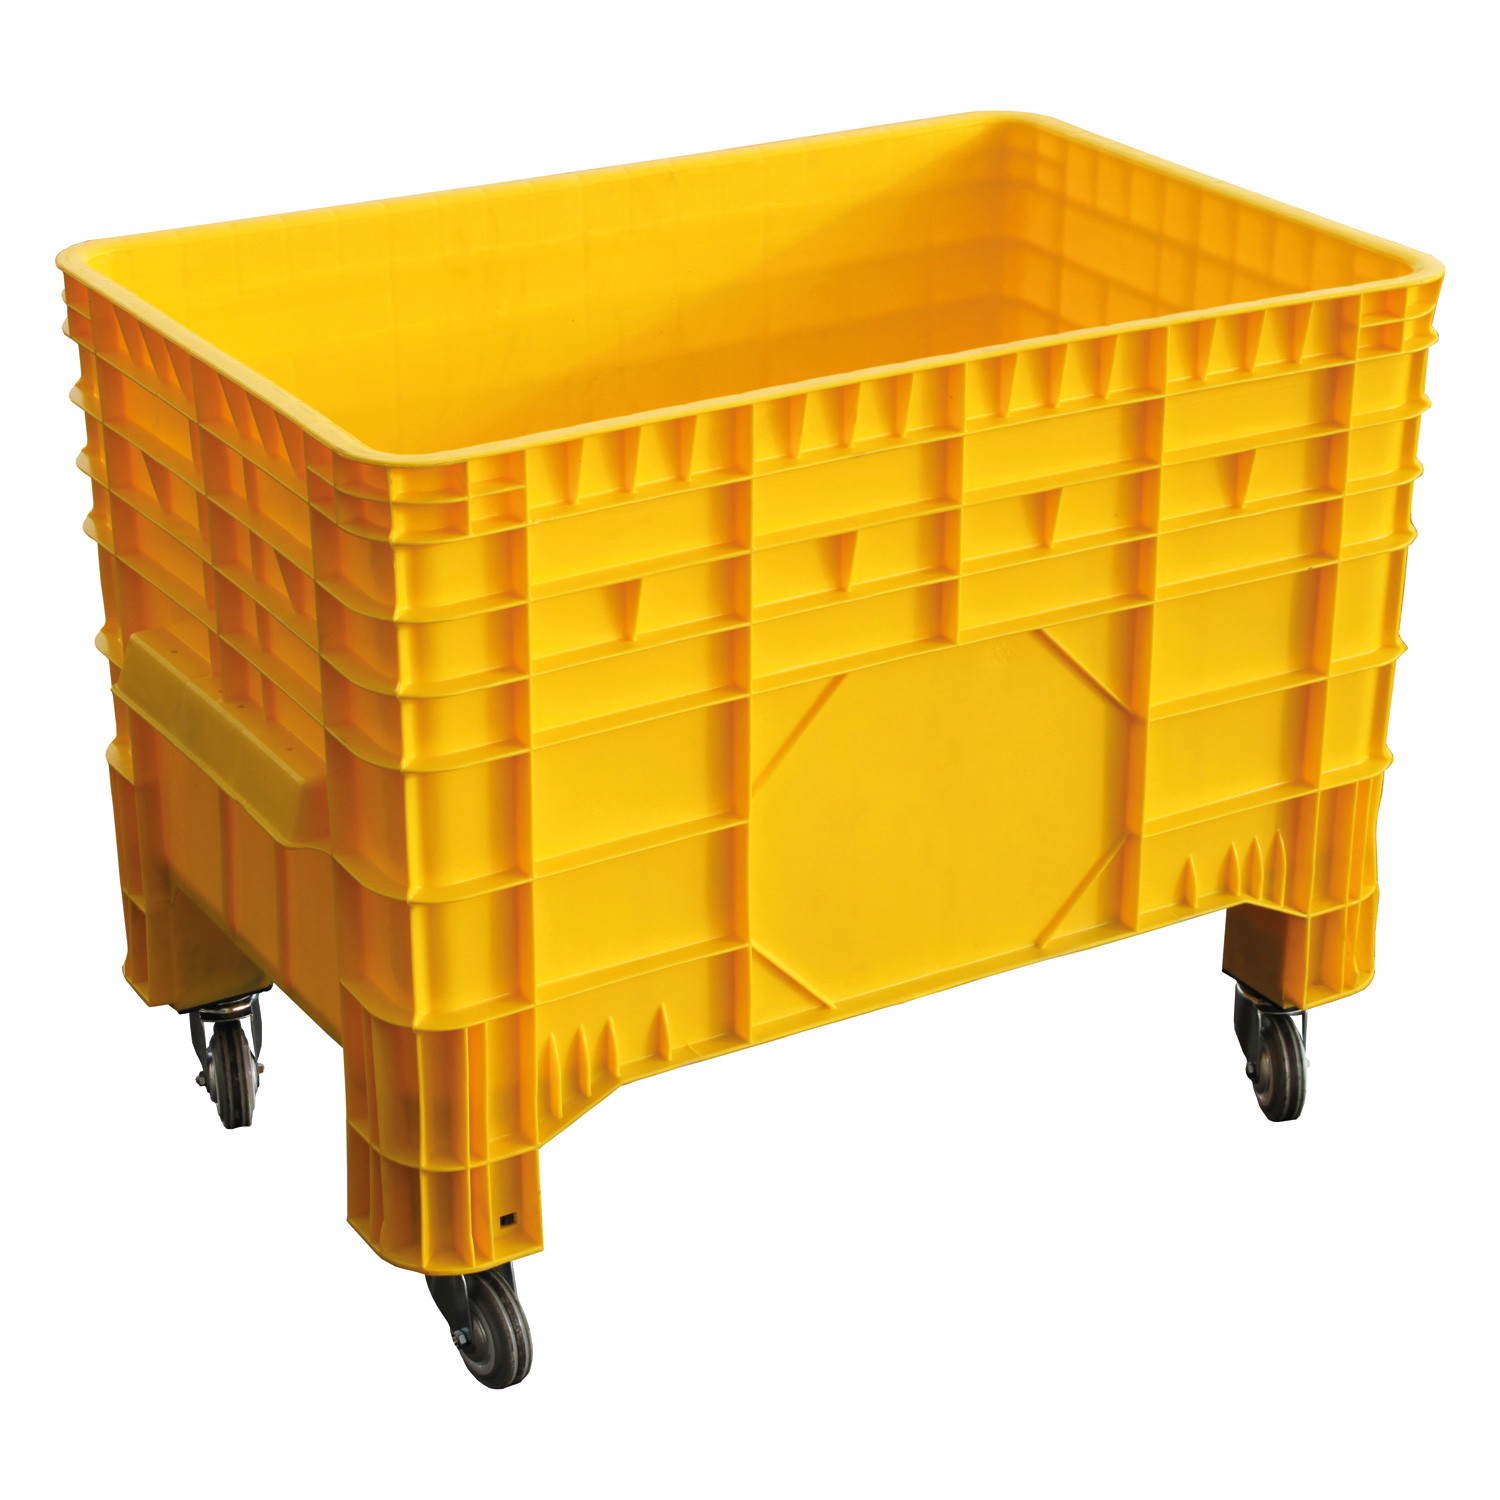 Großbehälter aus Polyethylen, 1040x640x790mm, HDPE, GELB (RAL 1018), 285 Liter